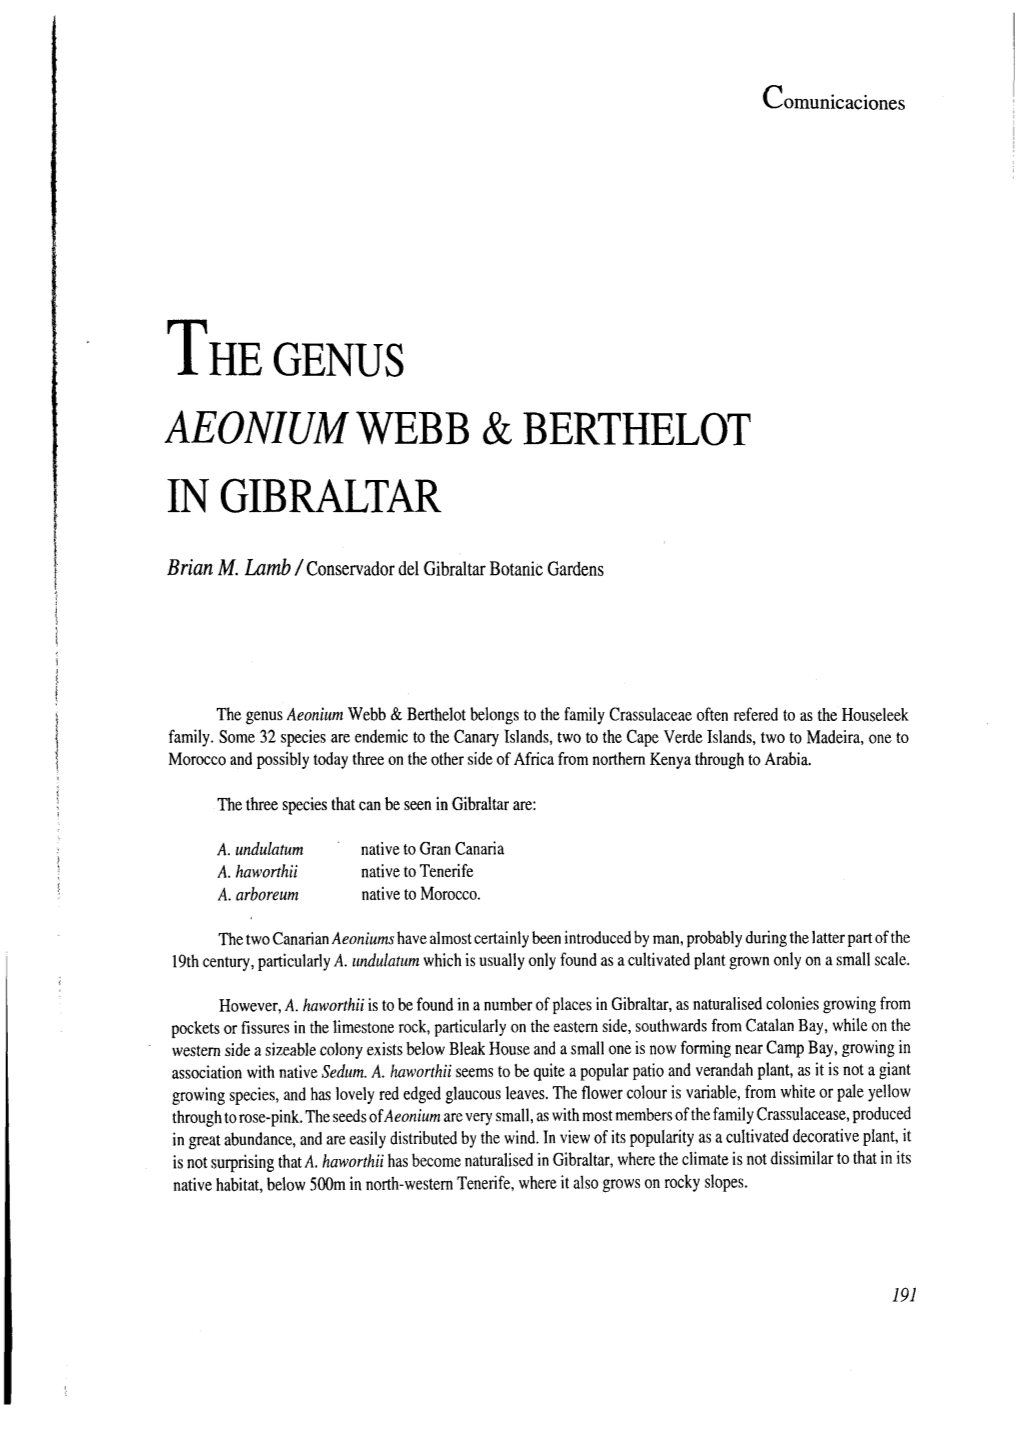 Aeonium Webb & Berthelot in Gibraltar